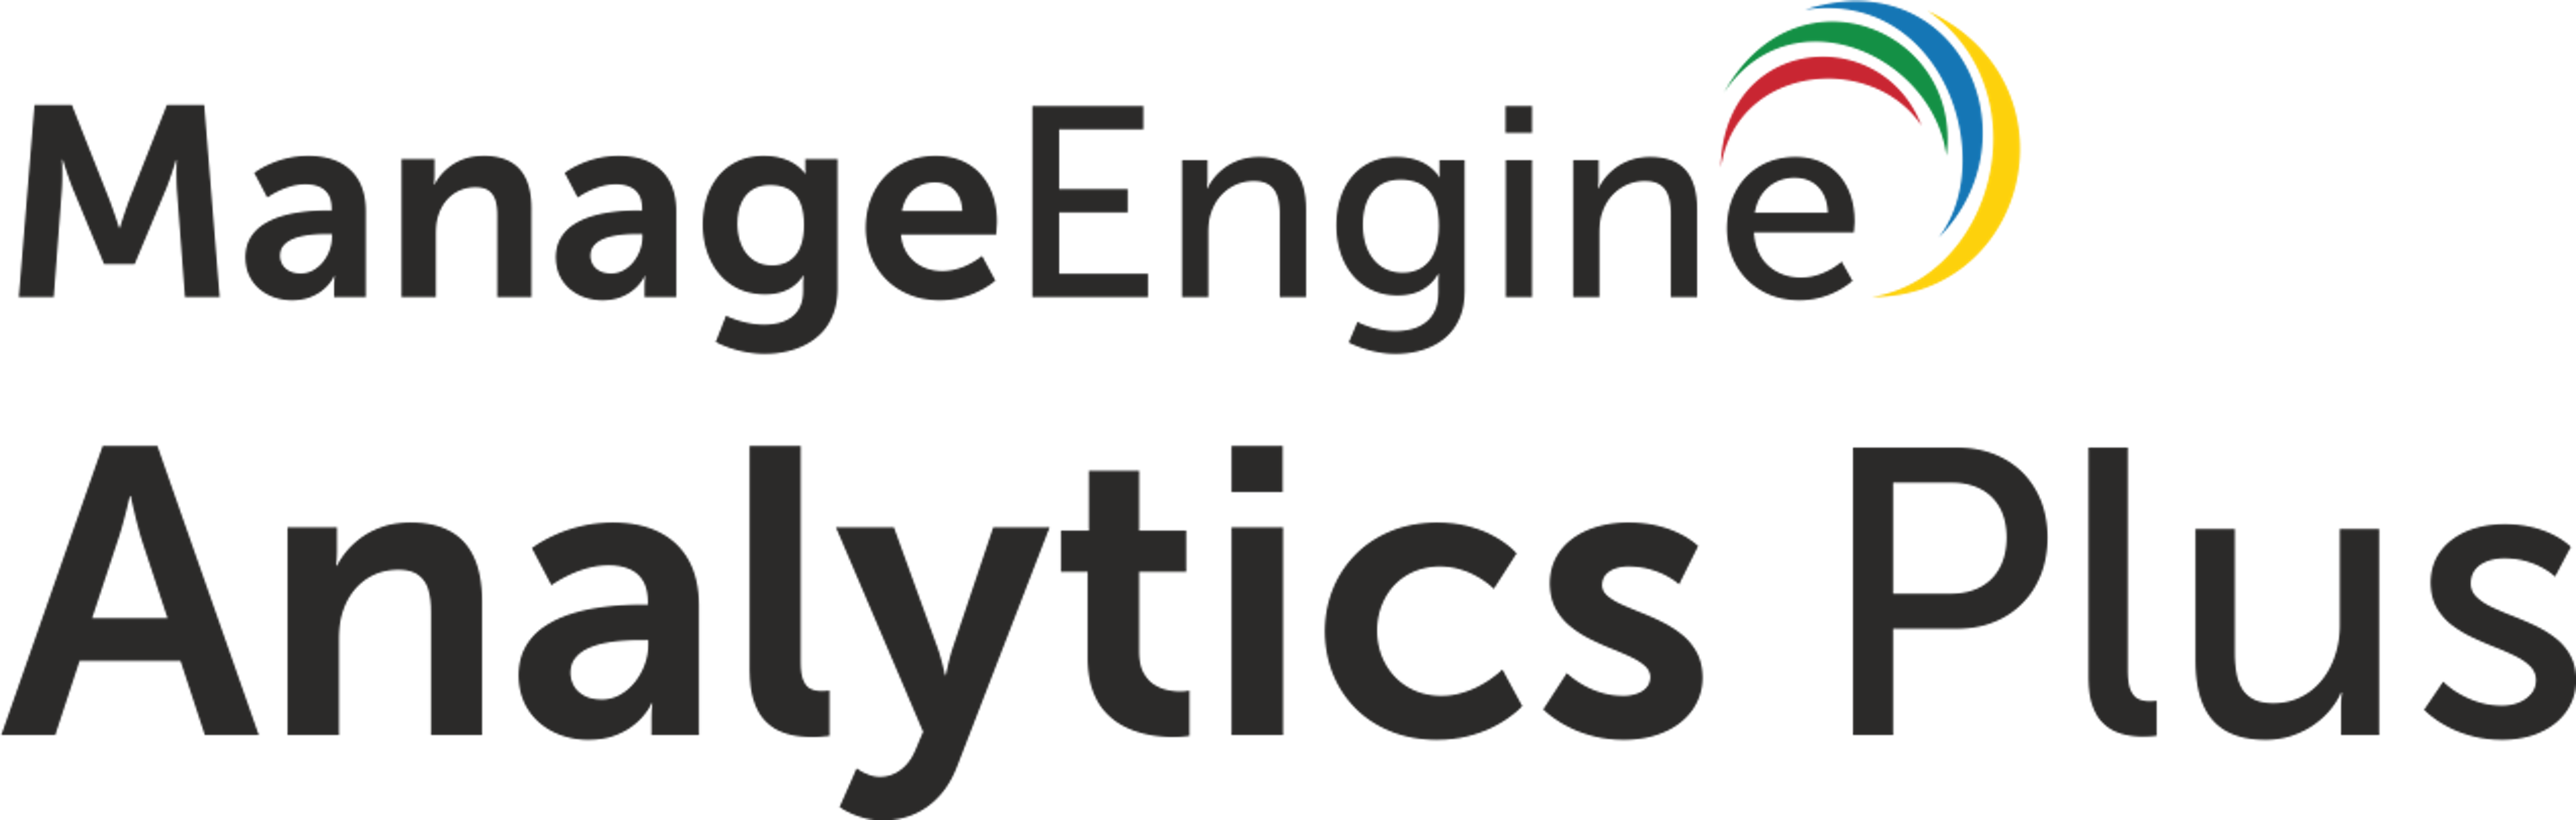 ManageEngine Analytics Plus Logo